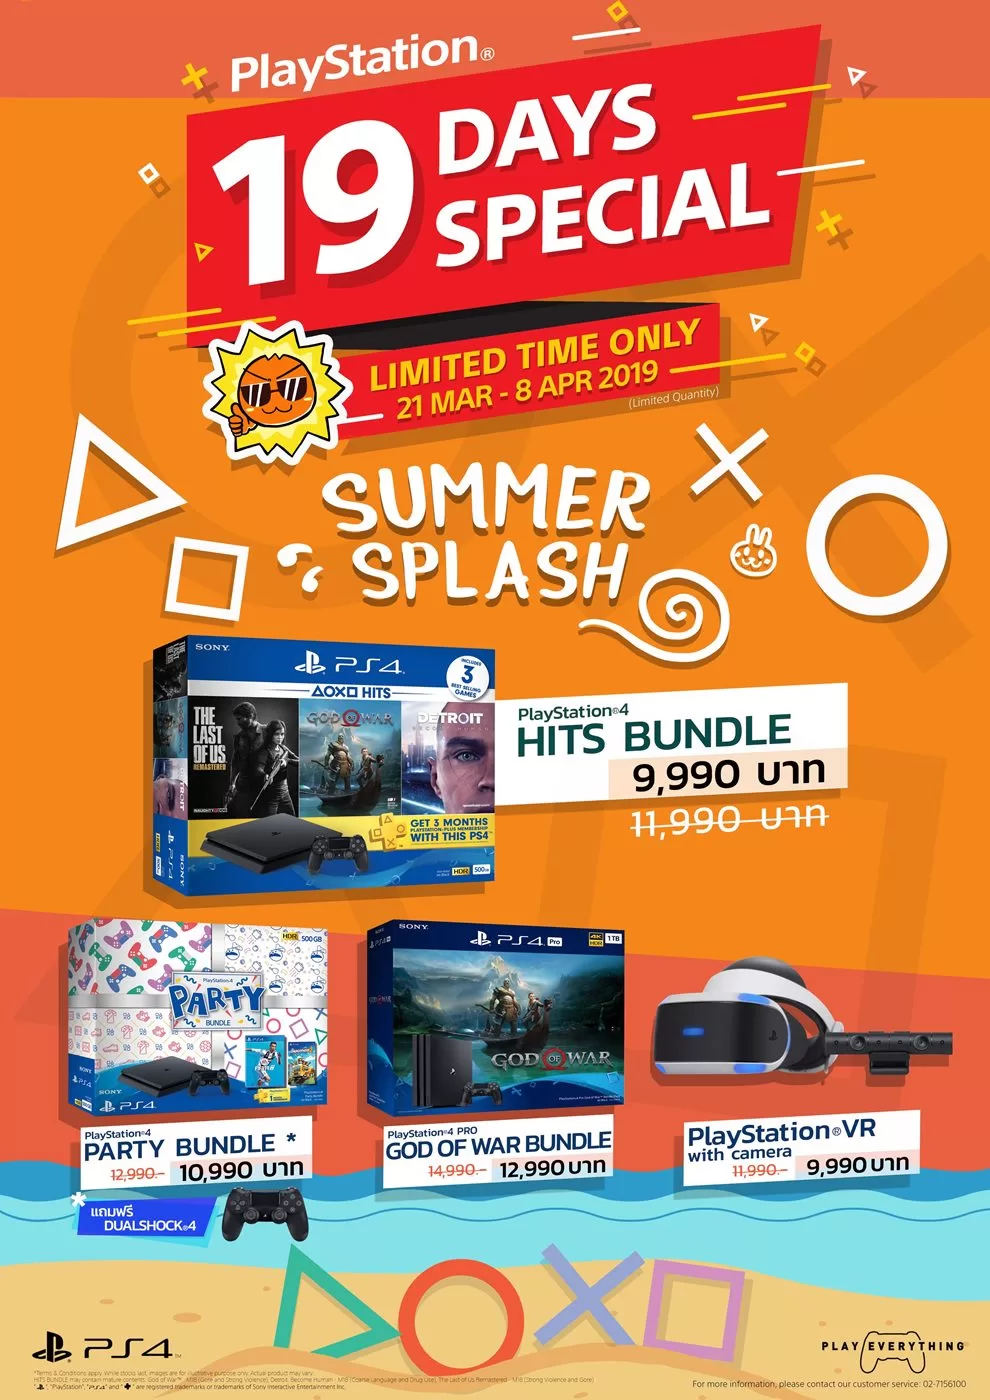 Summer Splash A2 Final | PS4 | Sony ไทยจัดแคมเปญ ลดราคาเครื่องเกม PS4 19 Days Special 19 วันสุดพิเศษ